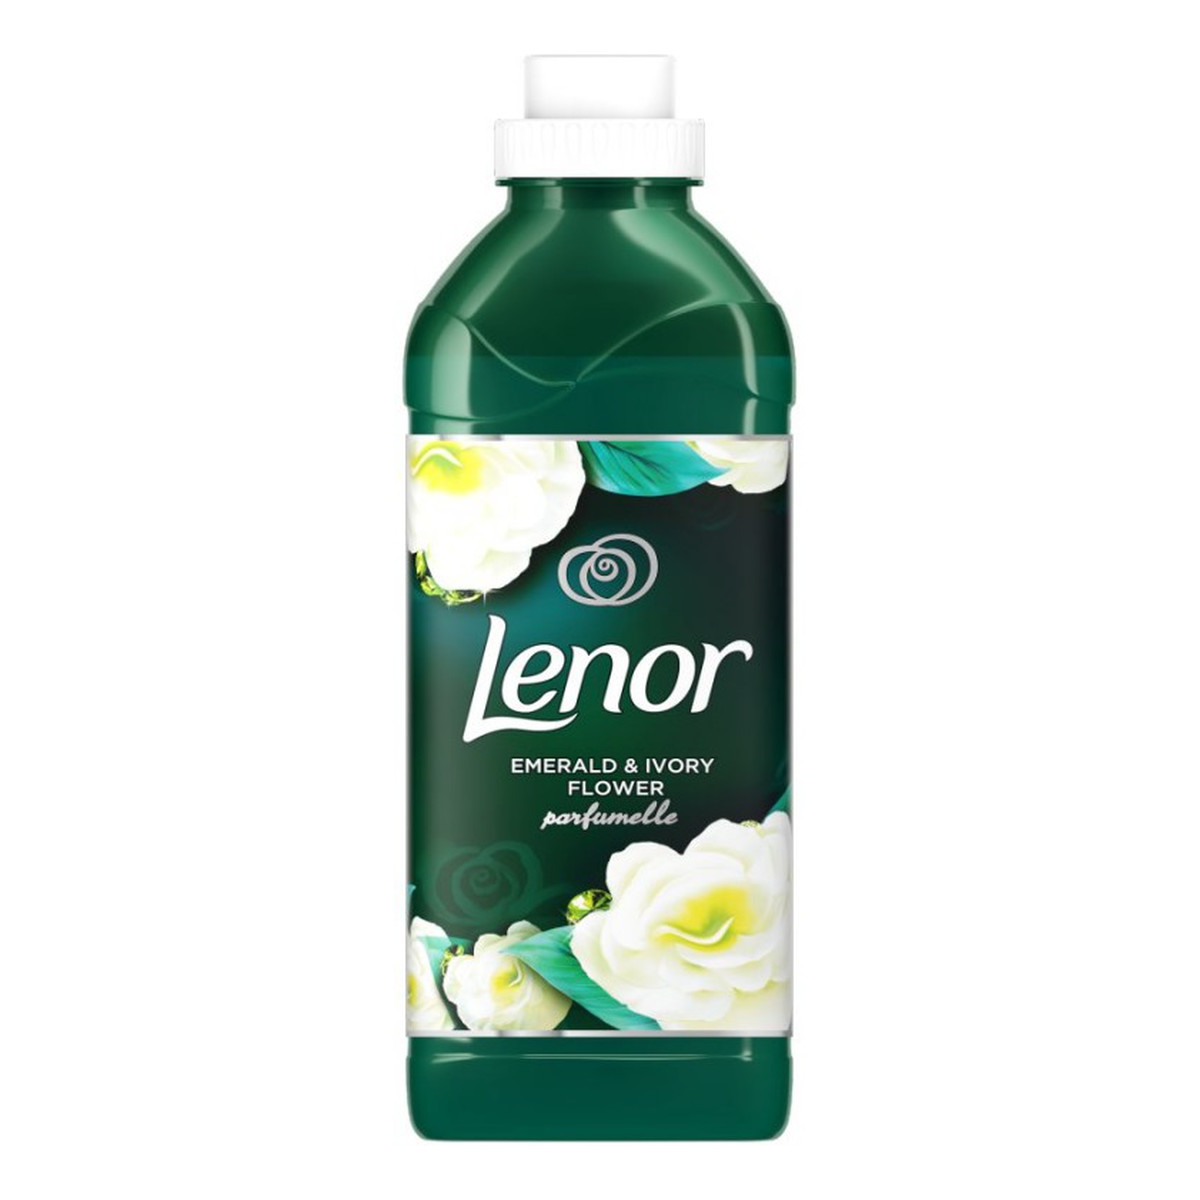 Lenor Perfumelle Emerald & Ivory Flower Płyn Do Płukania Tkanin 25 prań 750ml